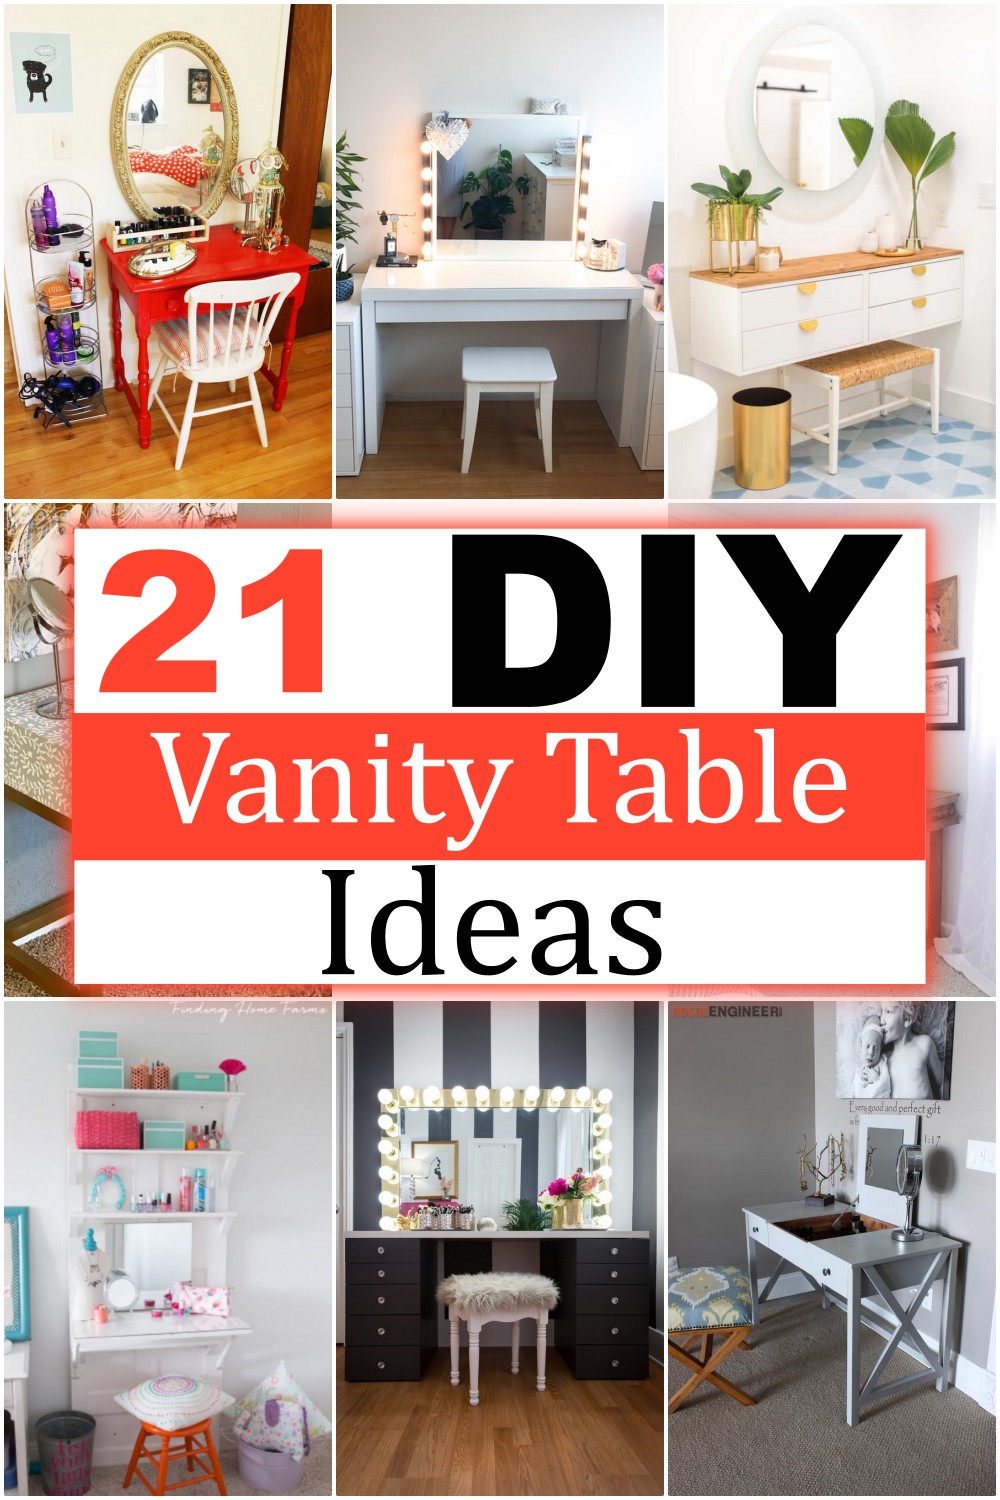 DIY Vanity Table Ideas